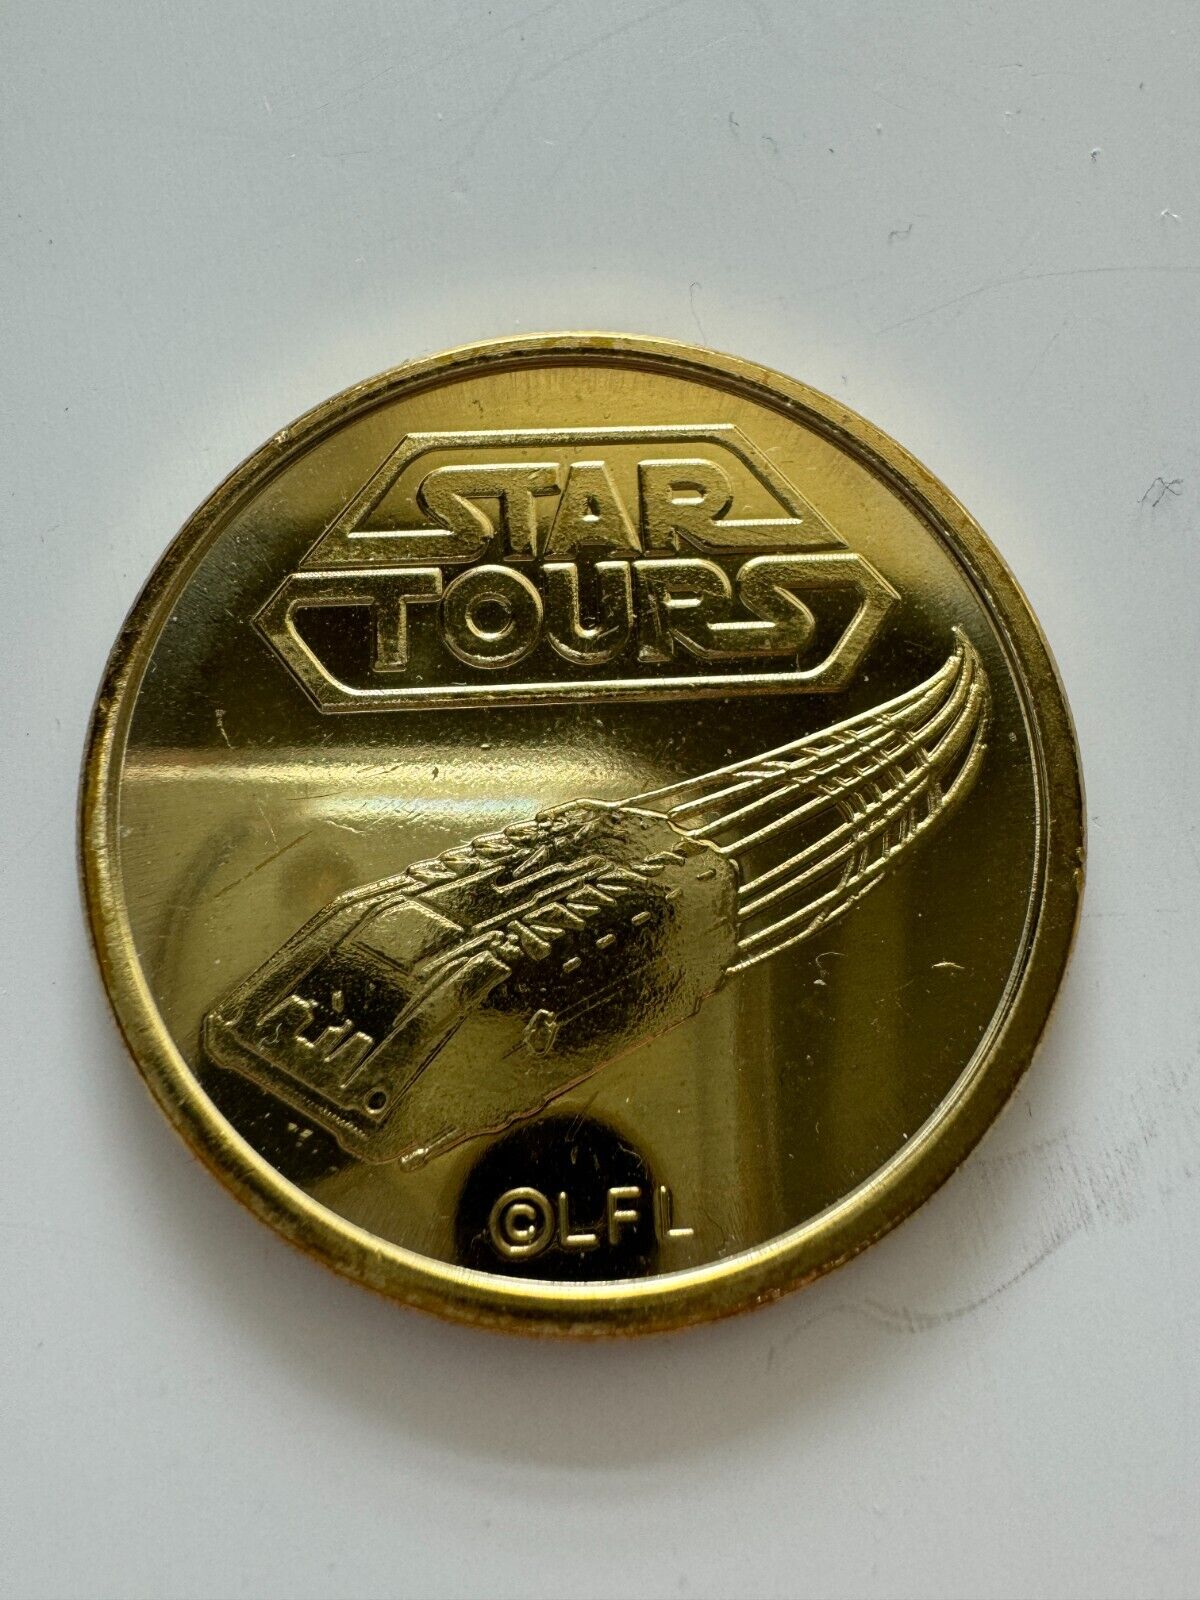 Disneyland Tomorrowland: STAR TOURS gold medallion coin Star Wars